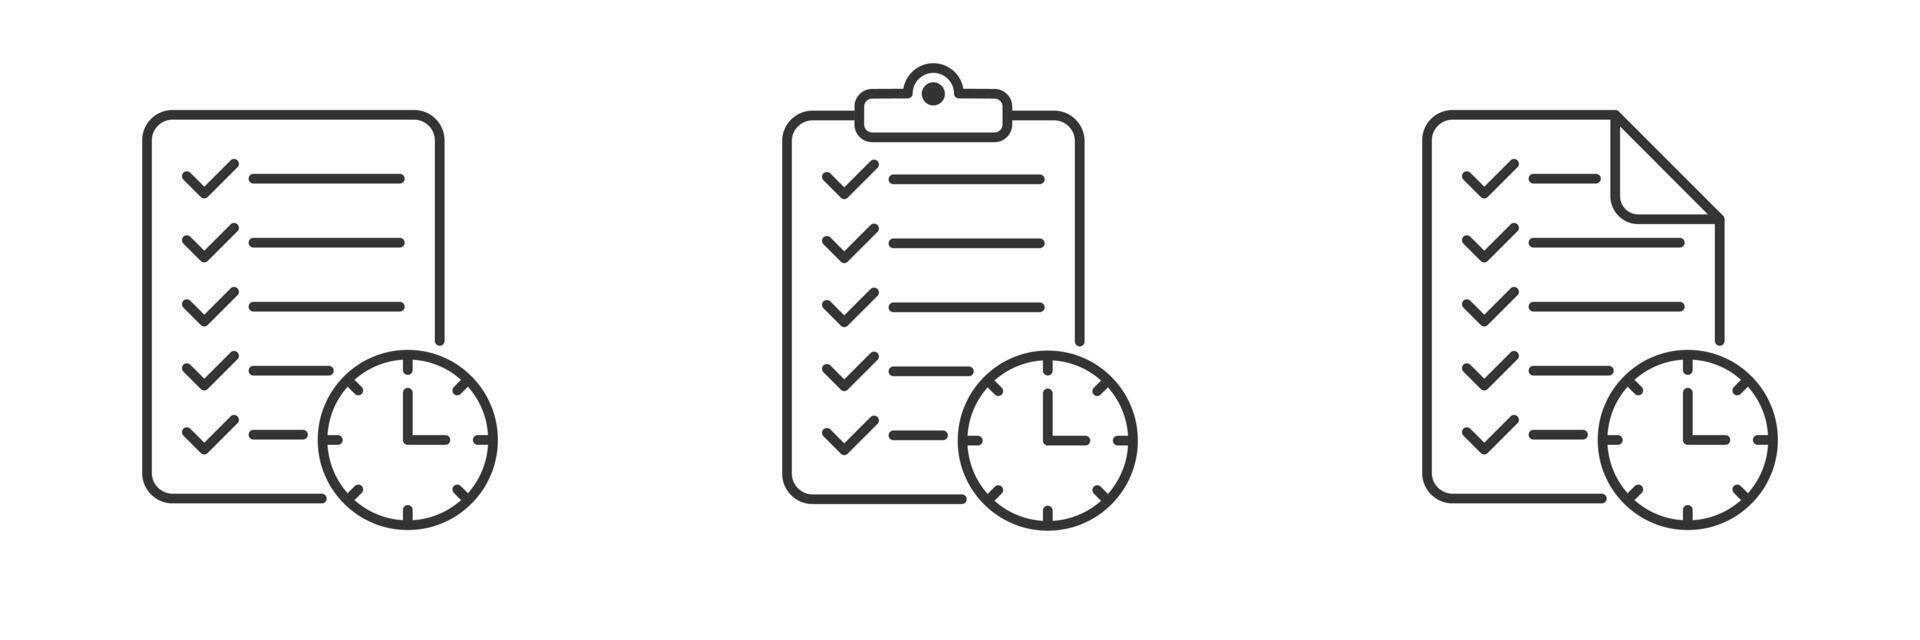 File, document, clock icon set. Vector illustration.